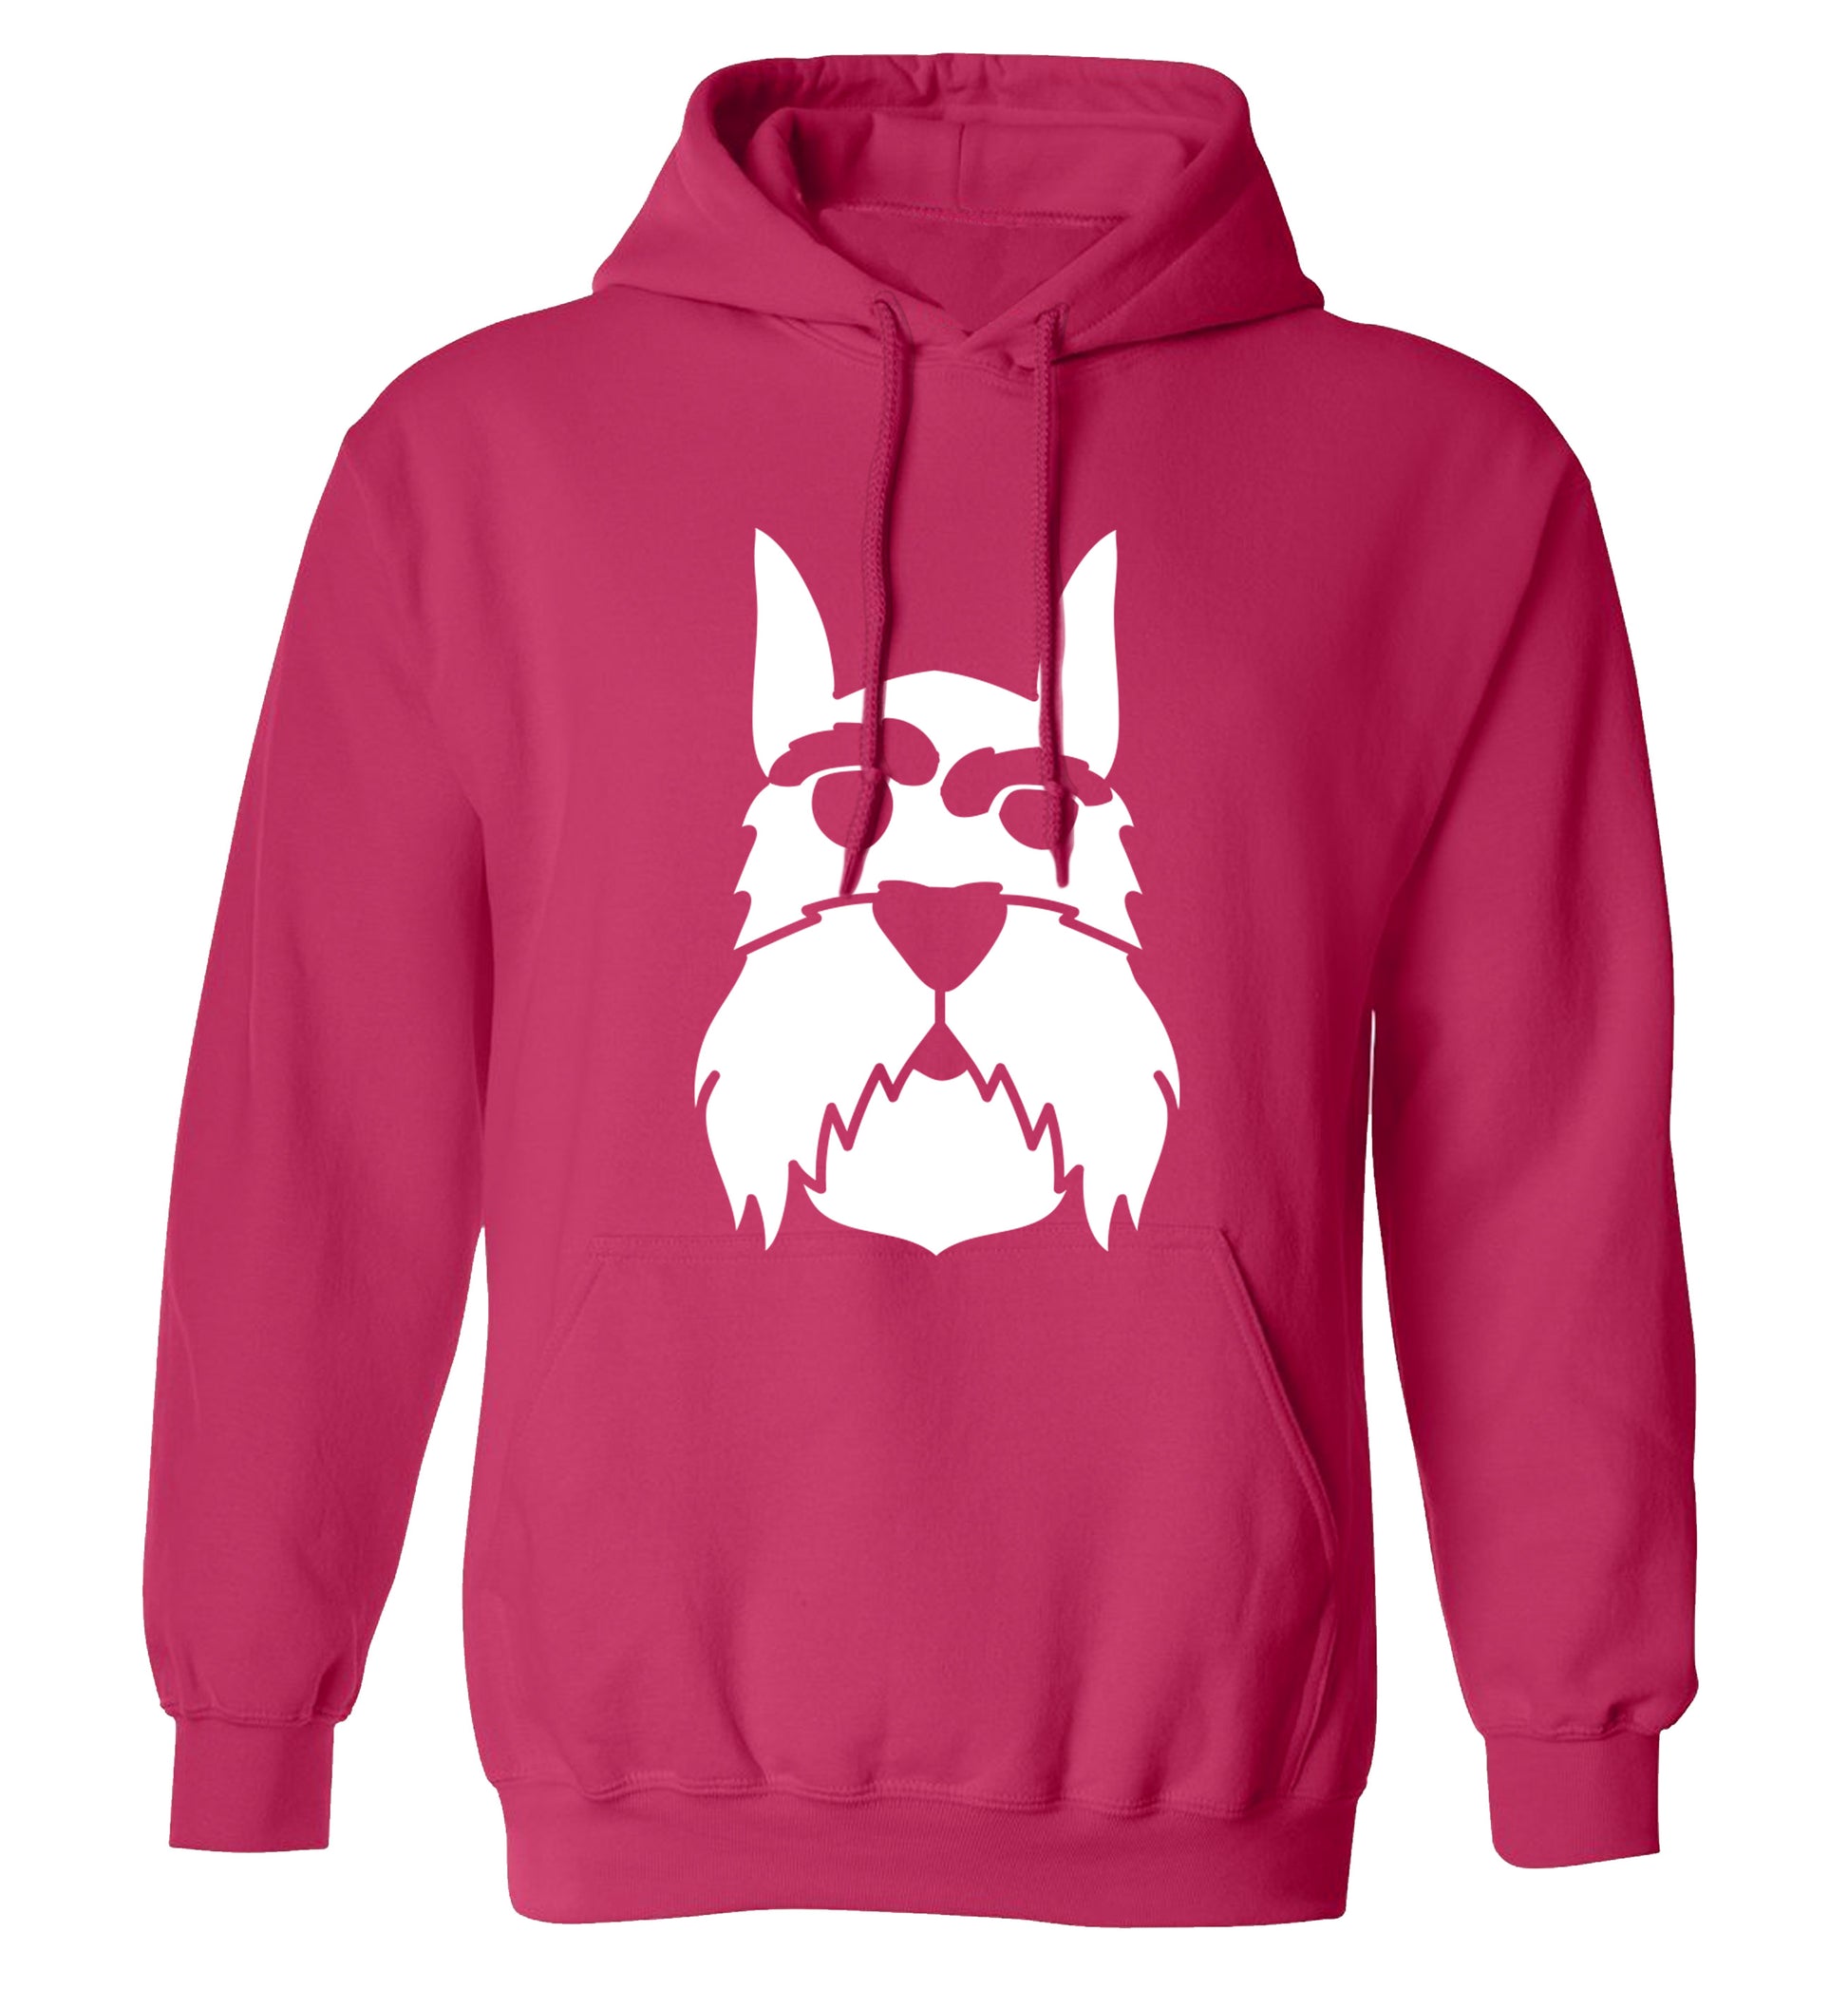 Schnauzer dog illustration adults unisex pink hoodie 2XL